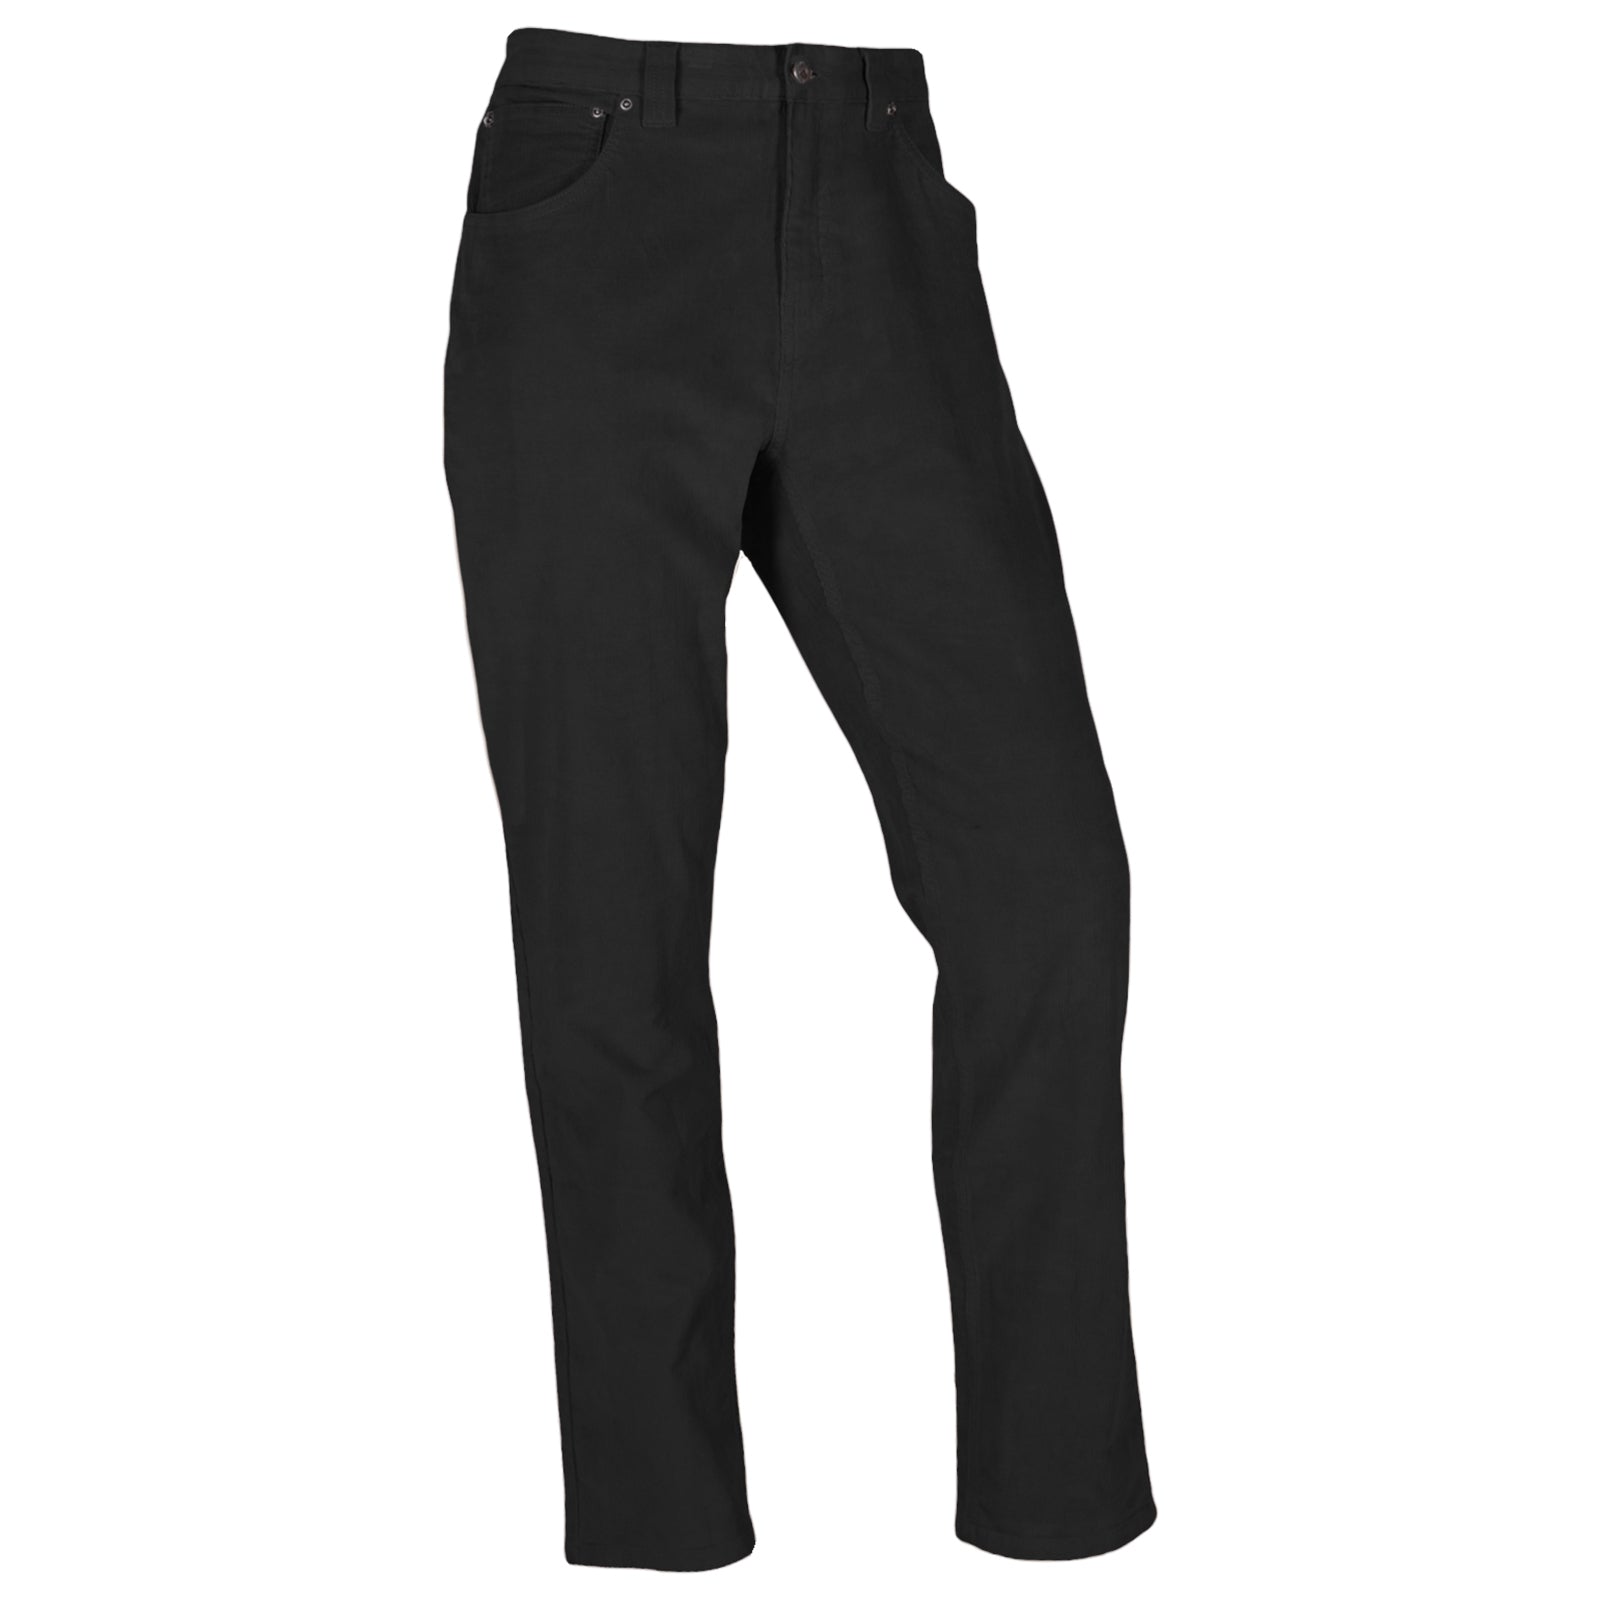 Men's Pants: Khakis, Chinos, Jeans & More | Mountain Khakis